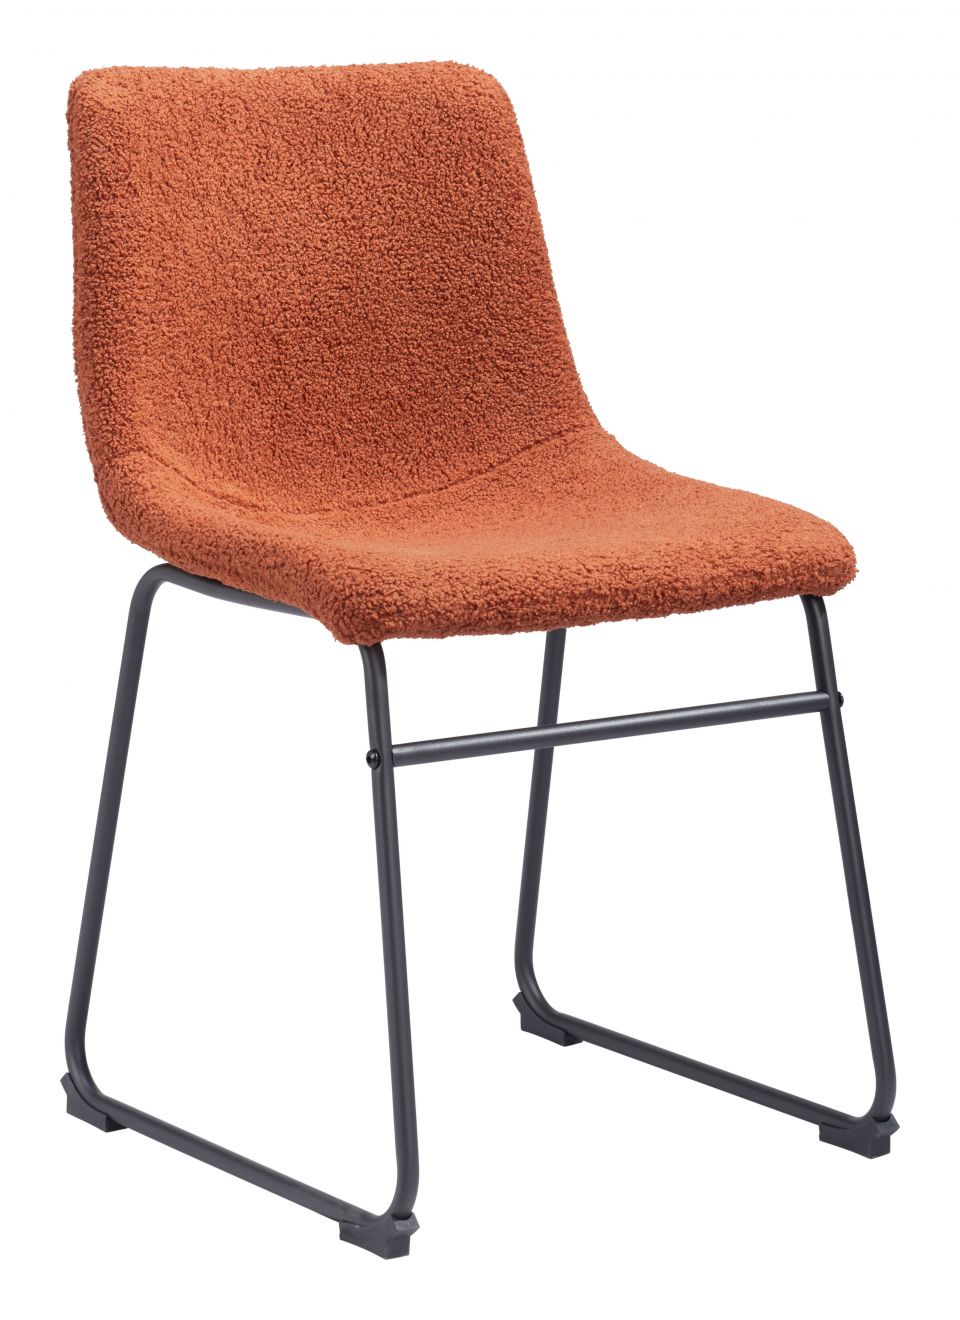 Burnt Orange Boucle Chair